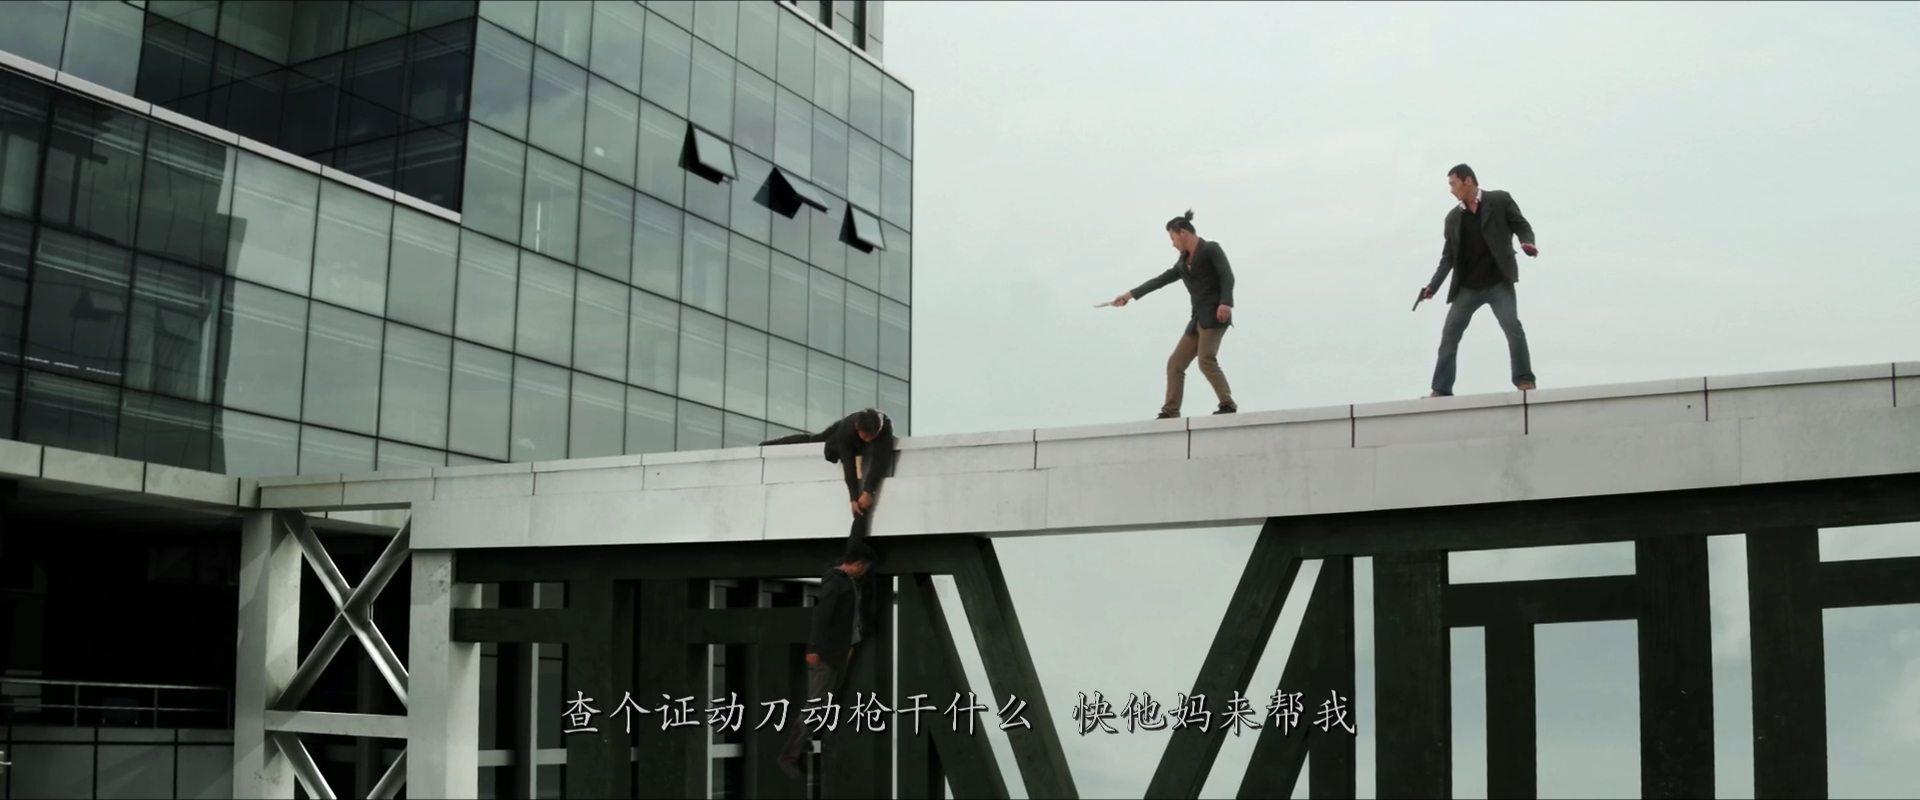 Кадр из фильма Тупик / Lie ri zhuo xin (2015)